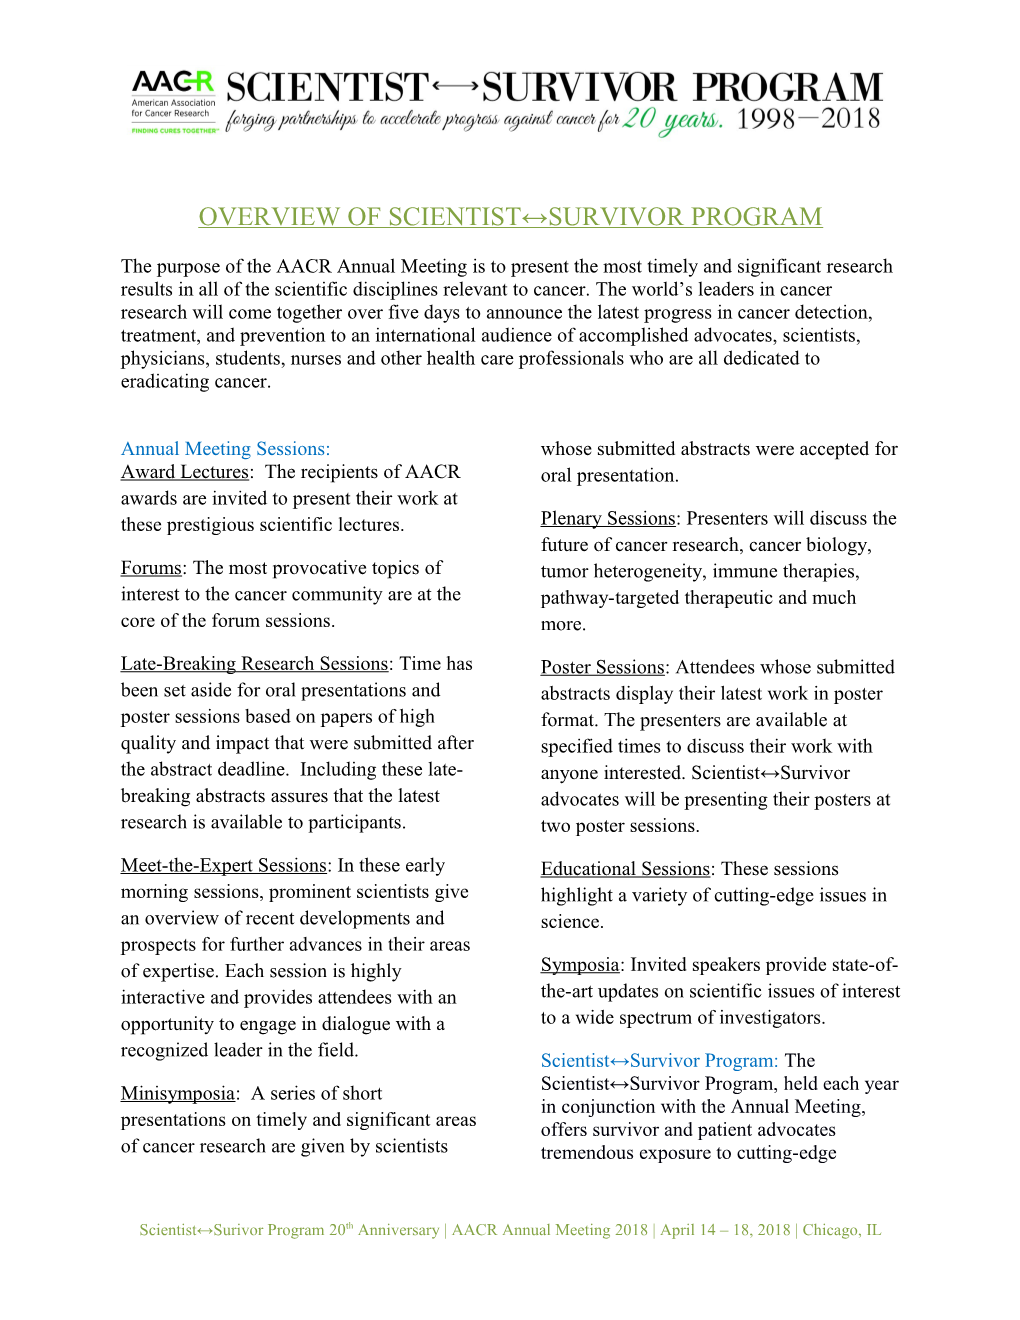 Overview of Scientist Survivor Program